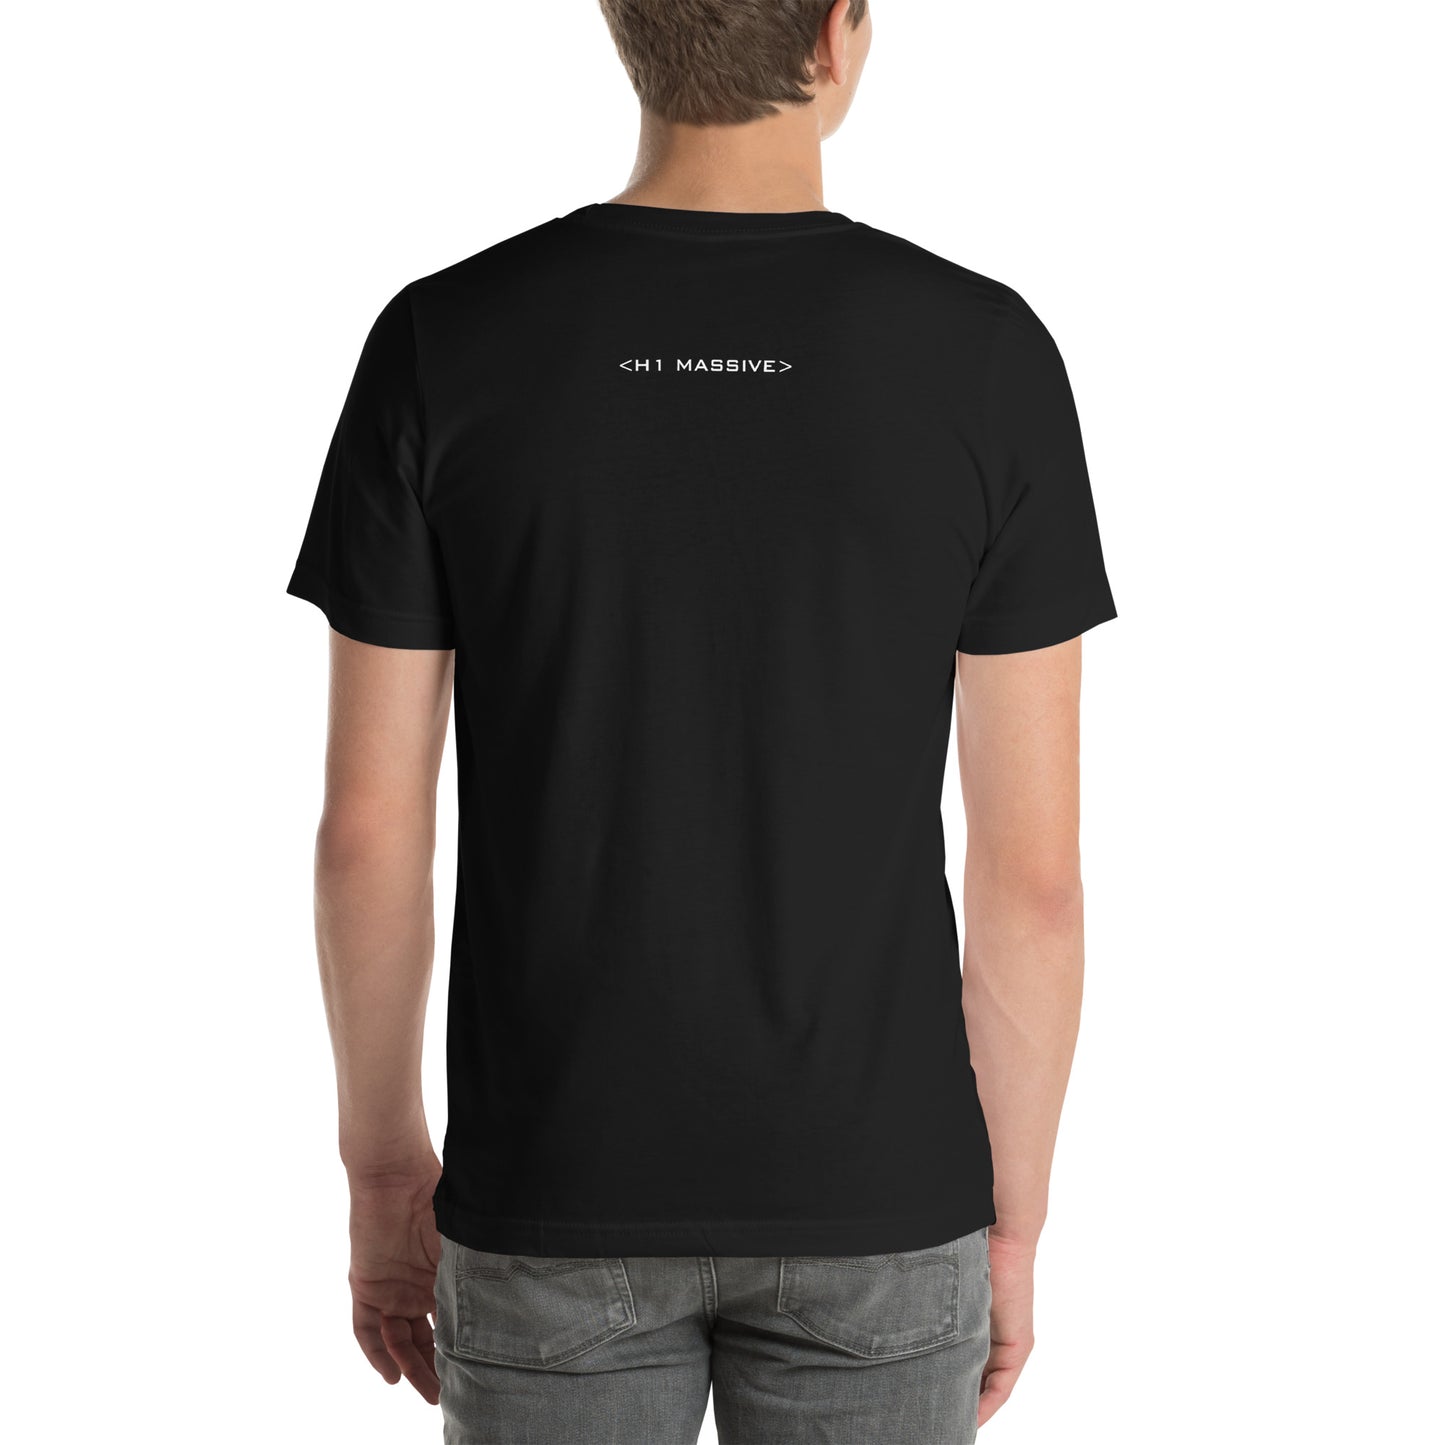 H1 Massive - Unisex t-shirt - Neil deGrasse Tyson "Prisoners of the Present"  Quote